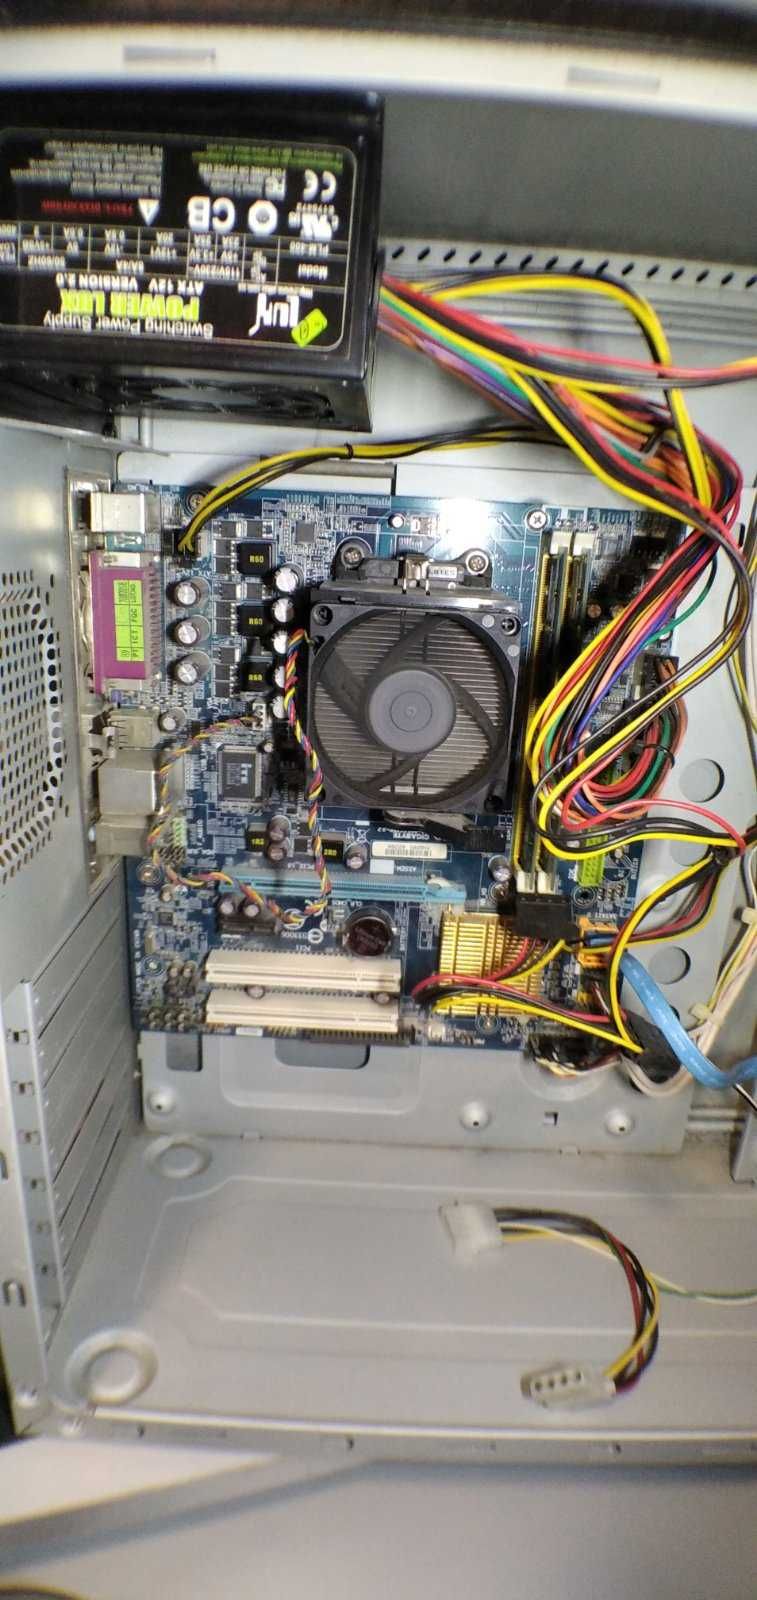 компьютер 2 ядра , 4гб